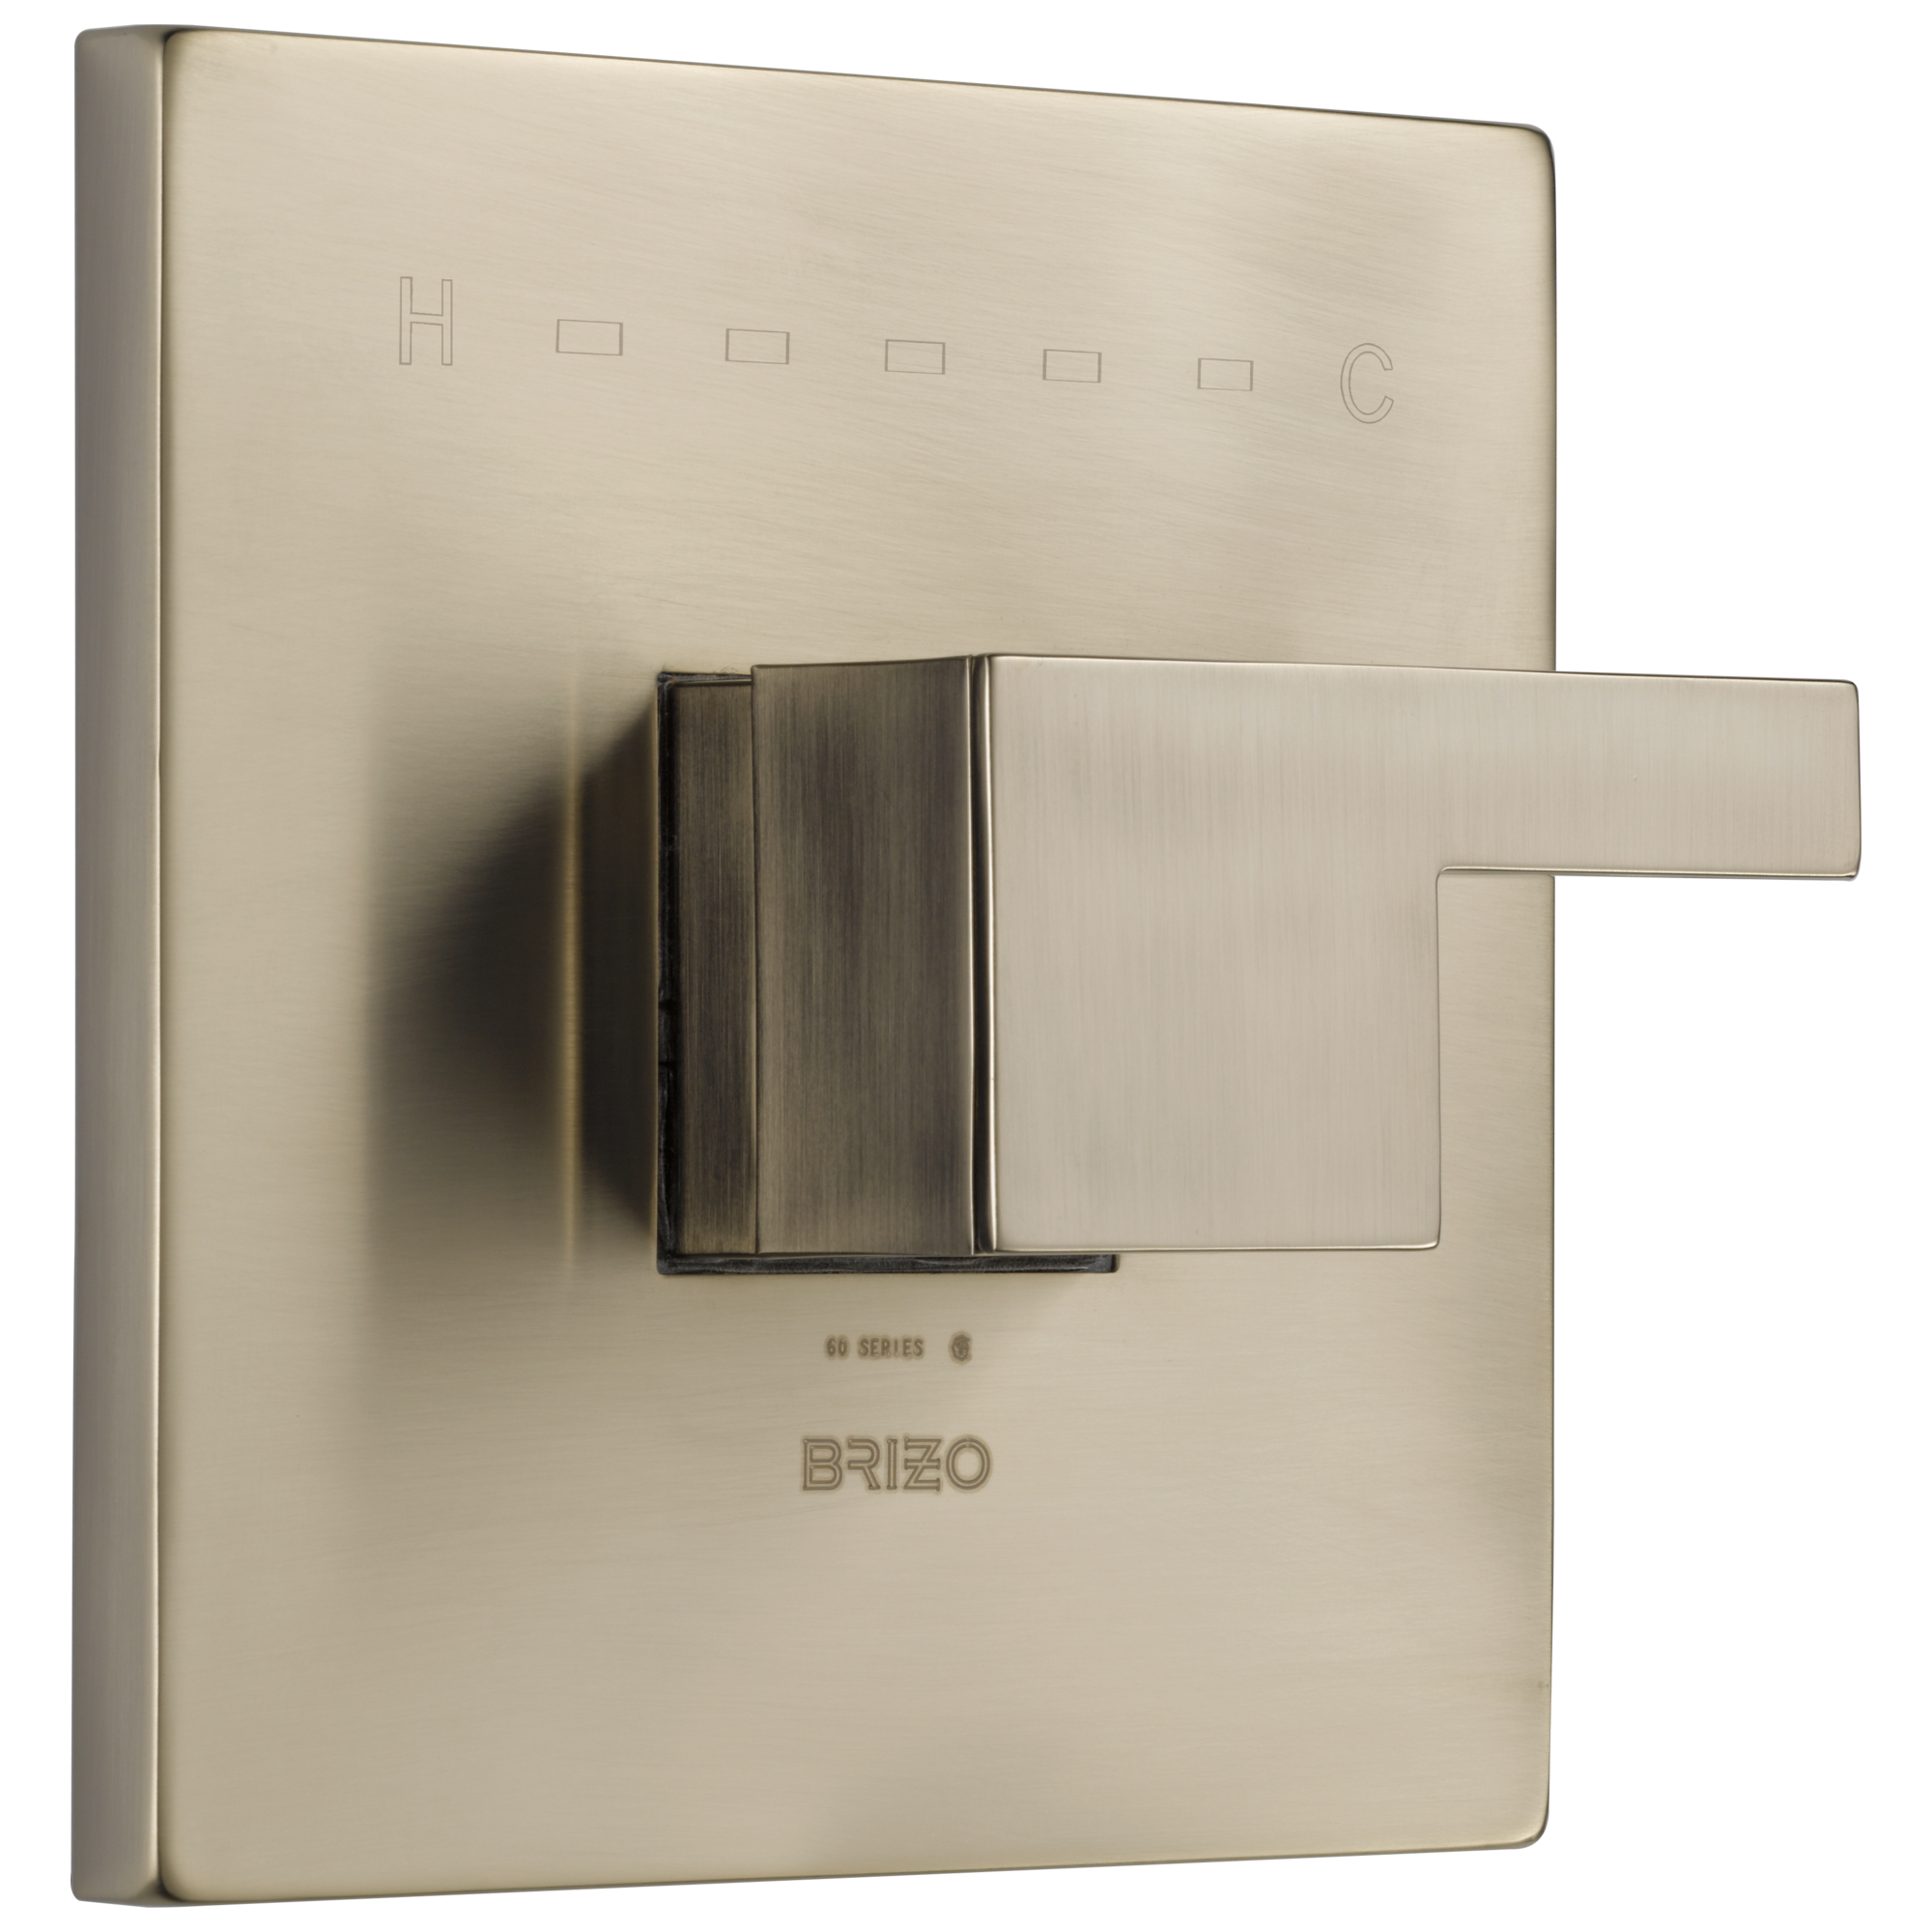 Brizo Siderna Sensori Thermostatic Valve Trim